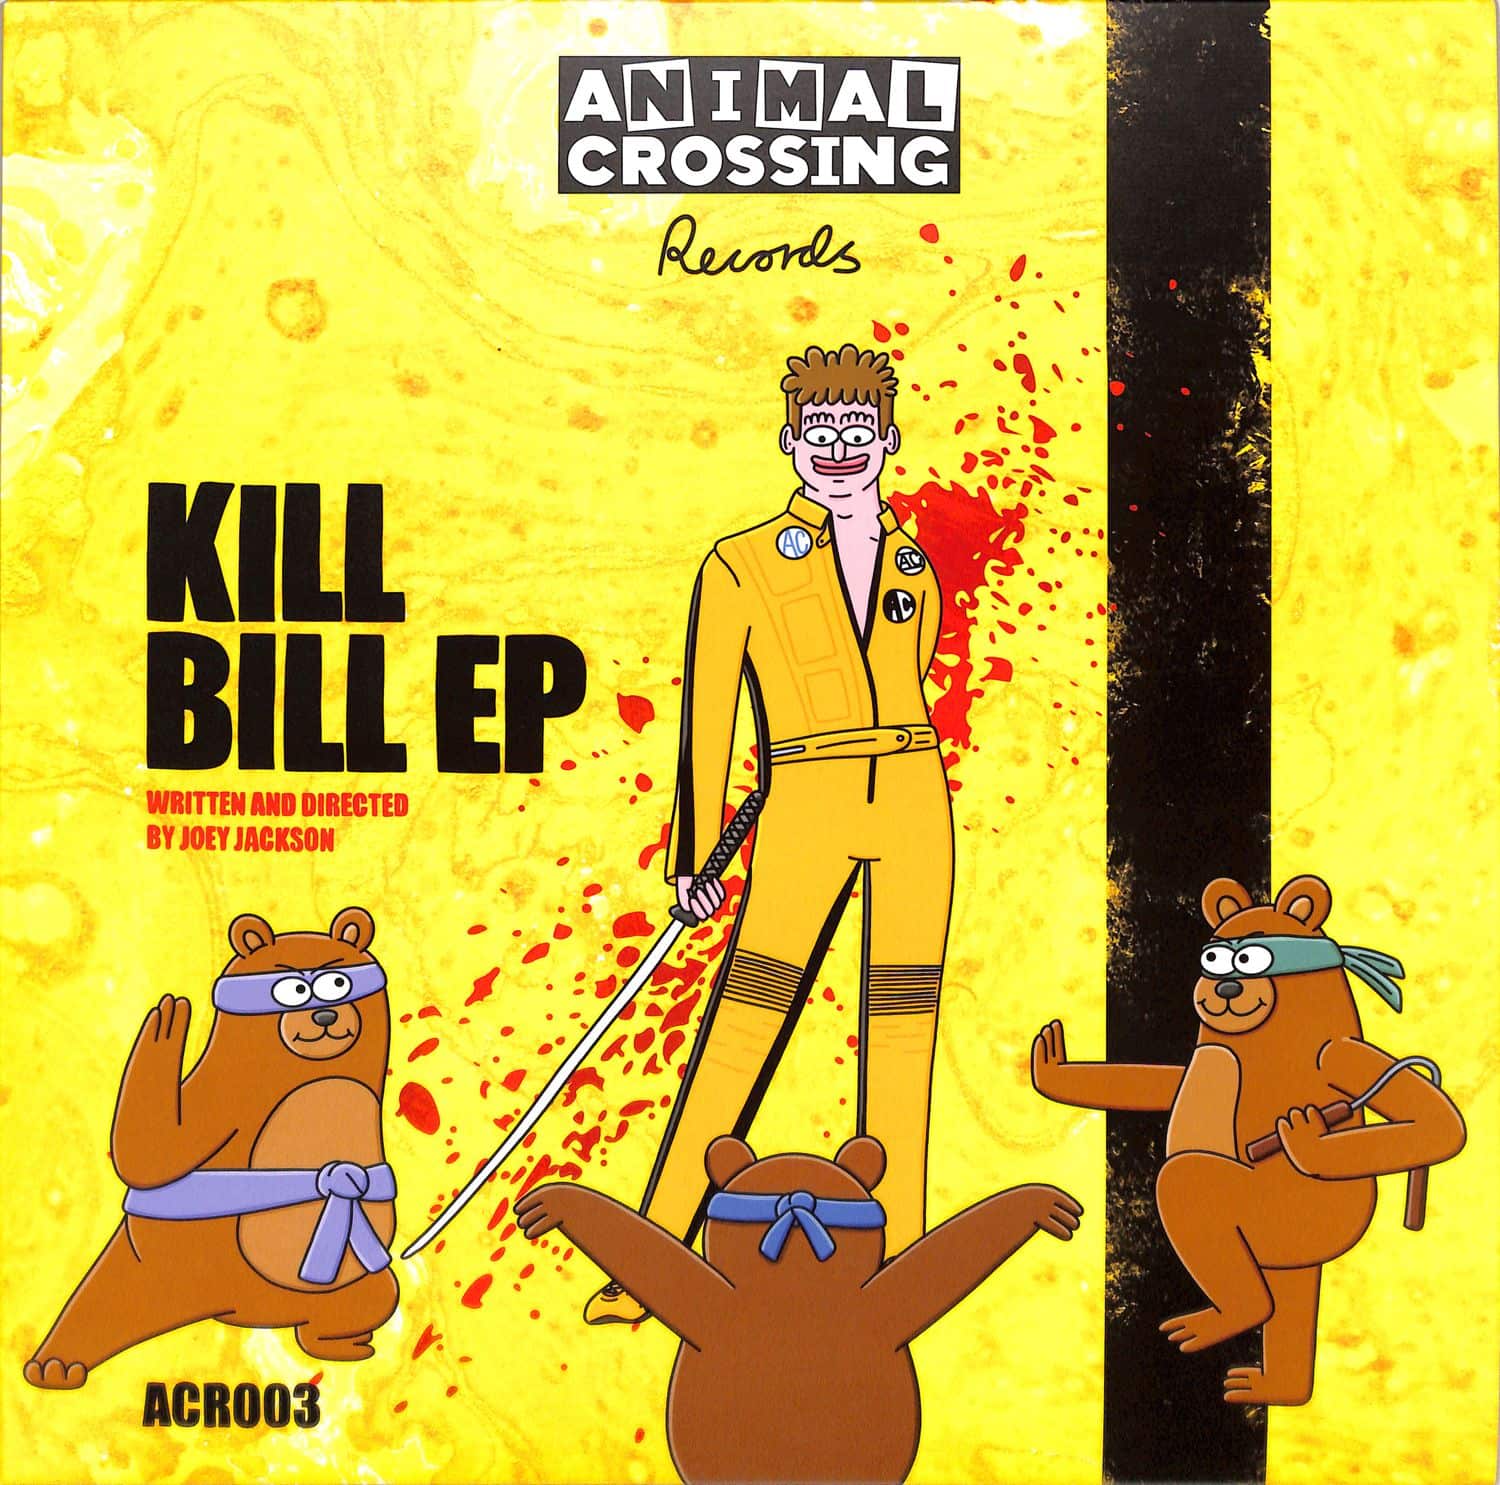 Joey Jackson - KILL BILL EP 